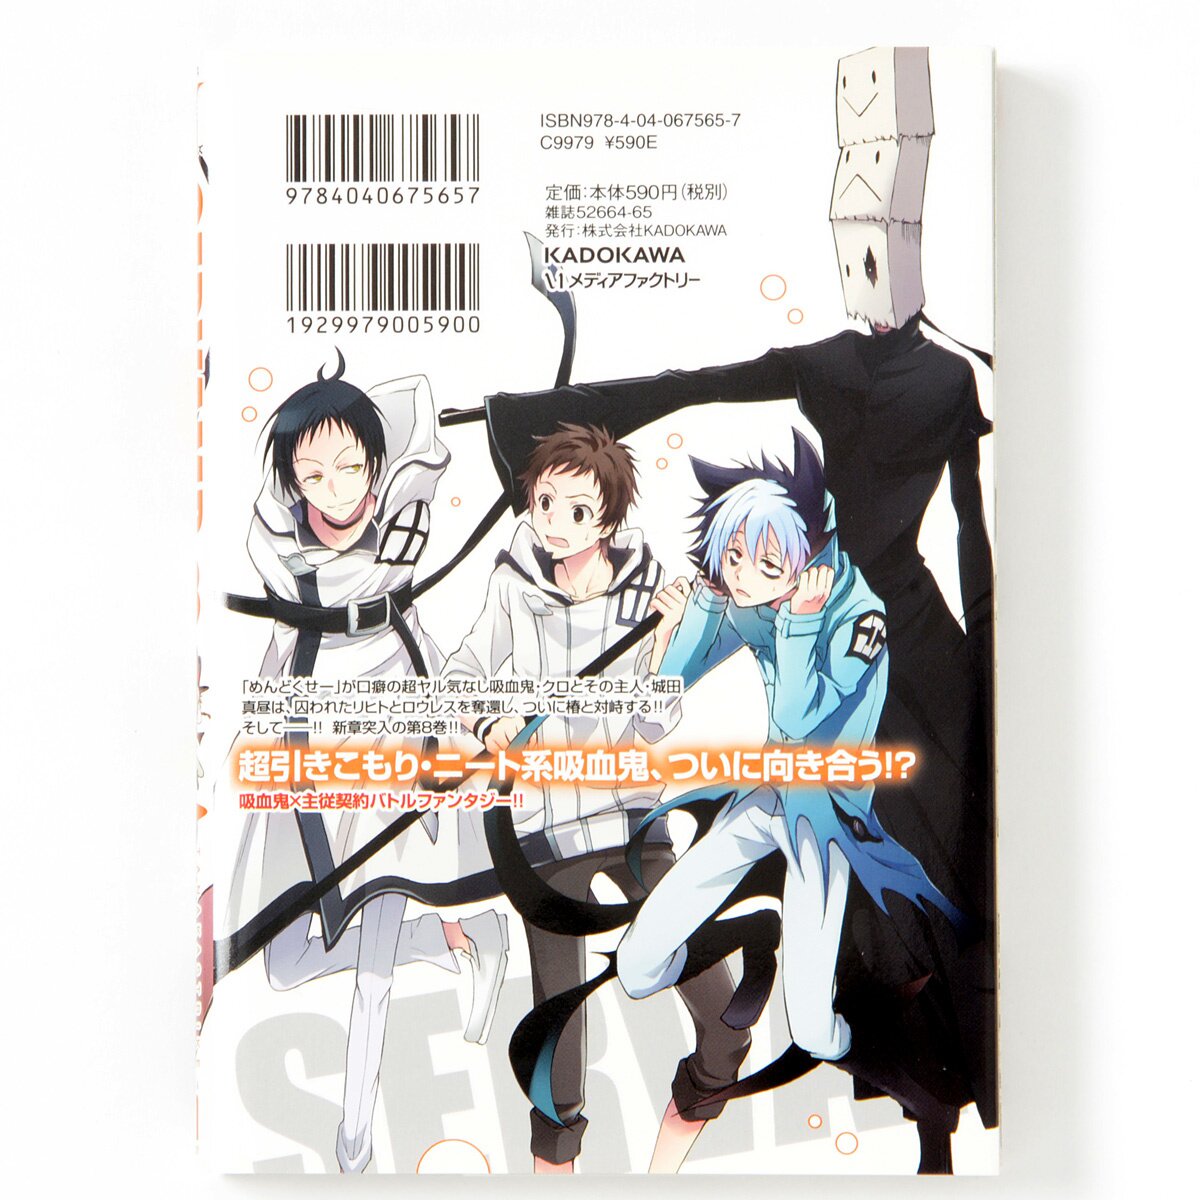 STRIKE ZONE 2 SERVAMP Illustration Works Japan Anime Manga Art Collection  Book